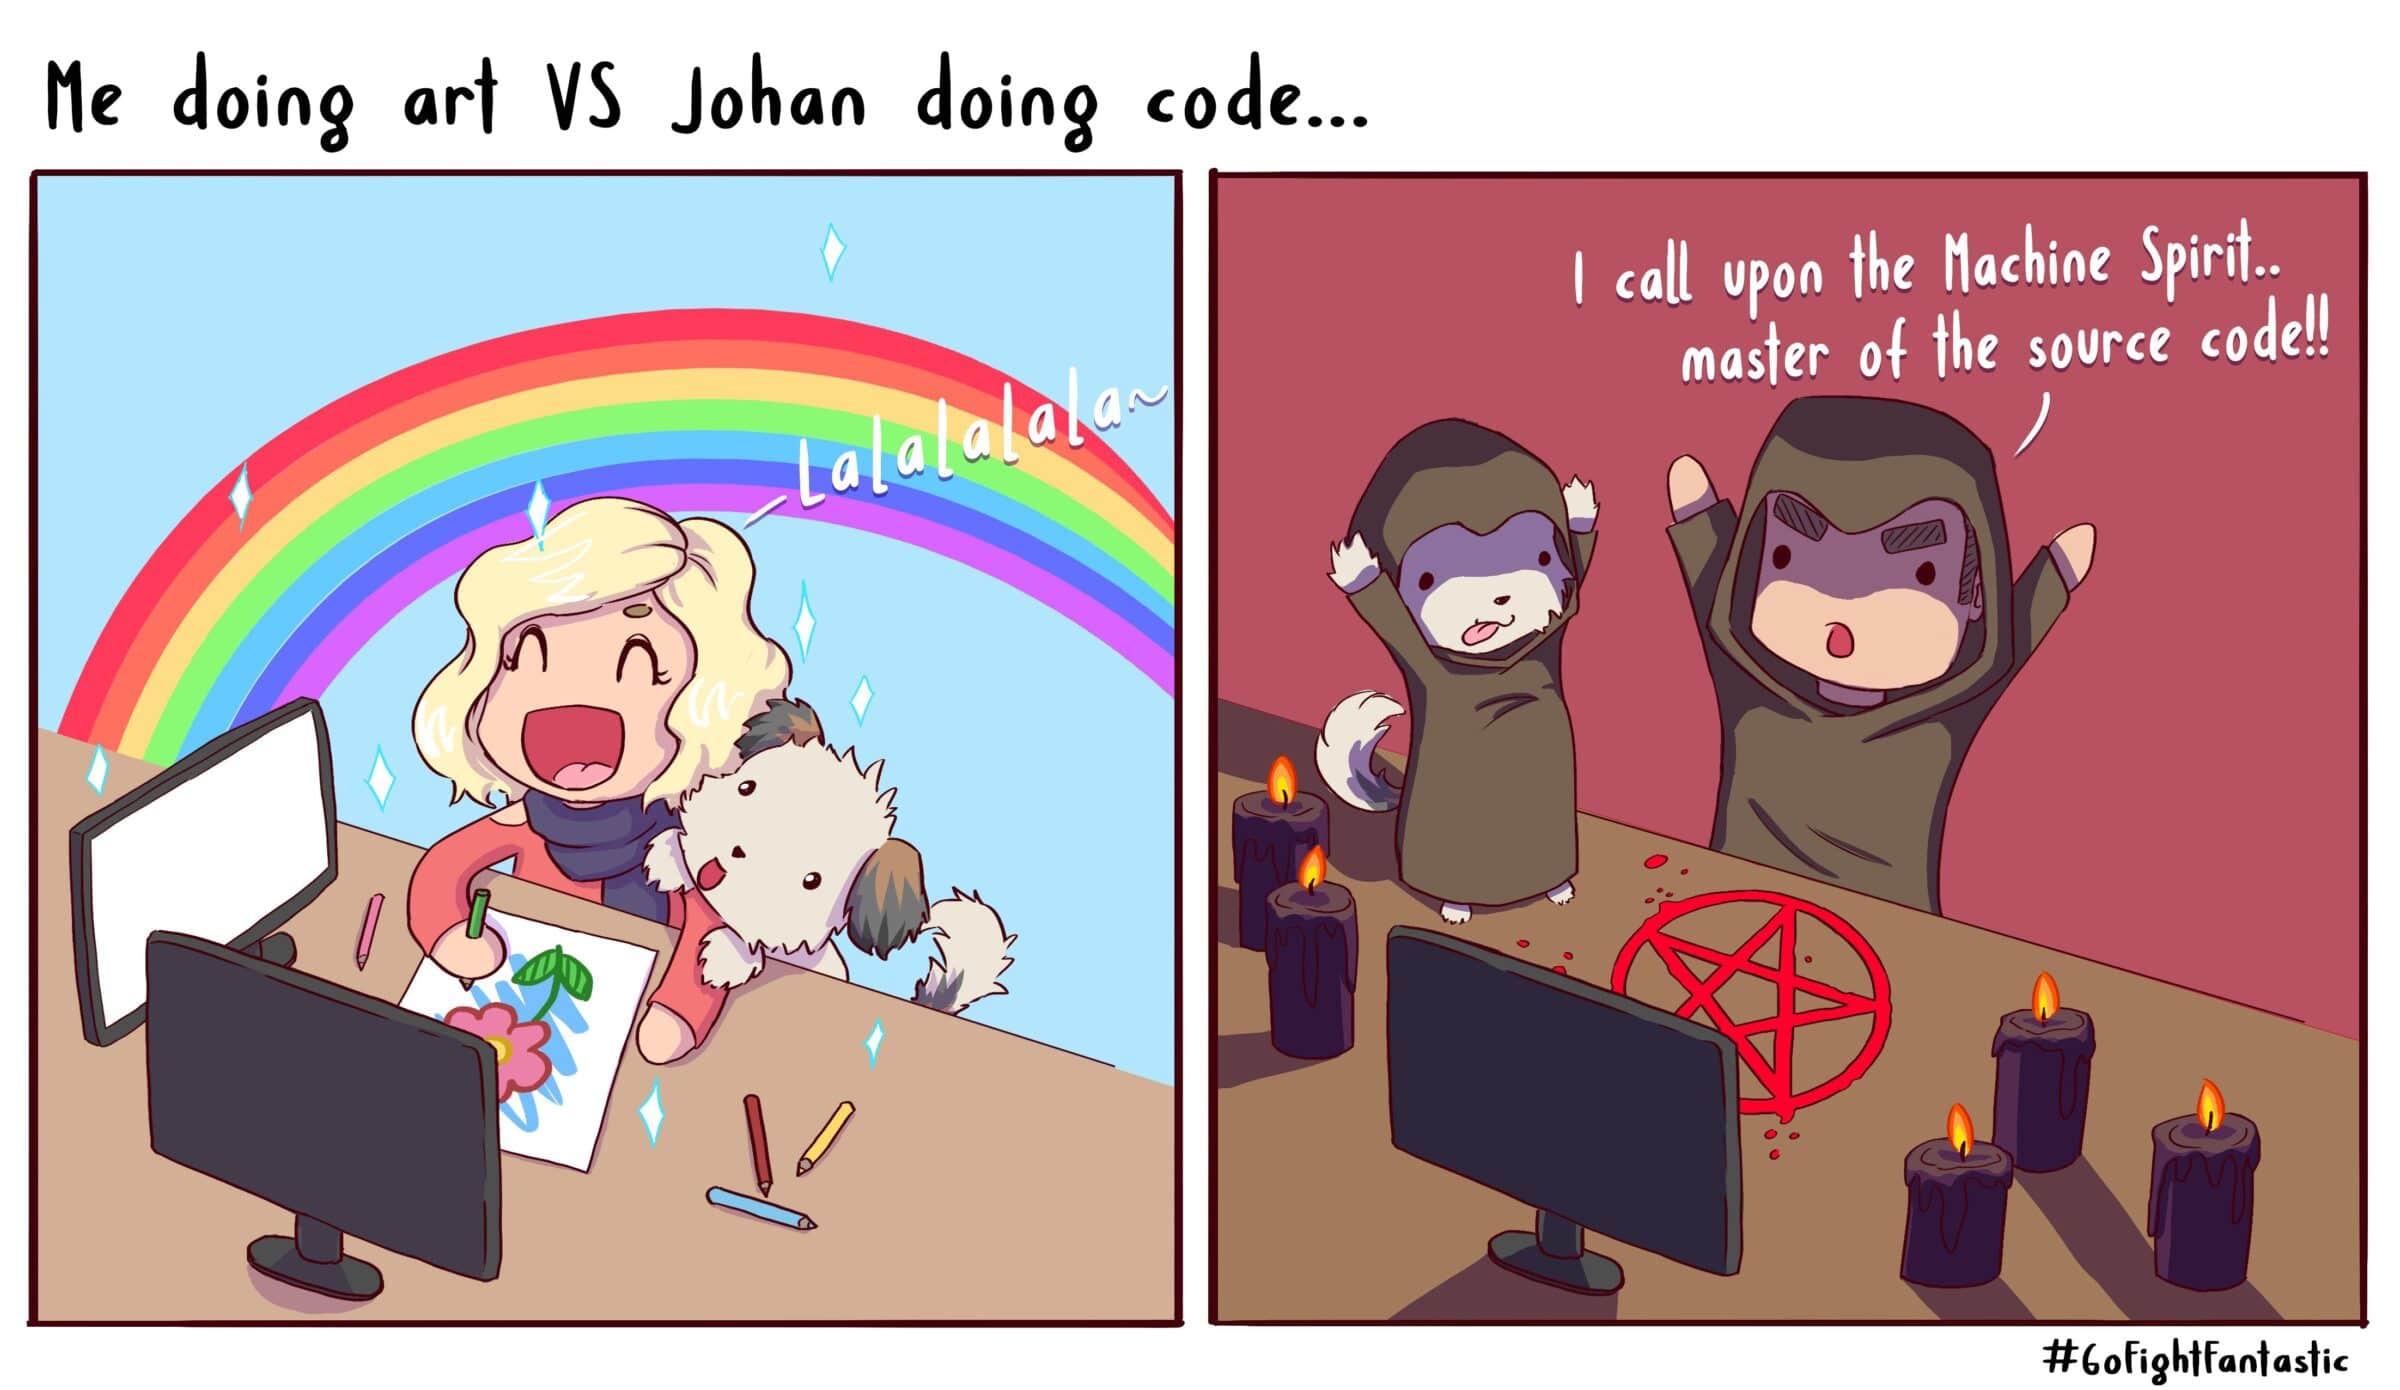  the hard life of a programmer vs an artist(from pyshe), XCode, VSCode, Thank, OC, Jo Comics  the hard life of a programmer vs an artist(from pyshe), XCode, VSCode, Thank, OC, Jo text: 